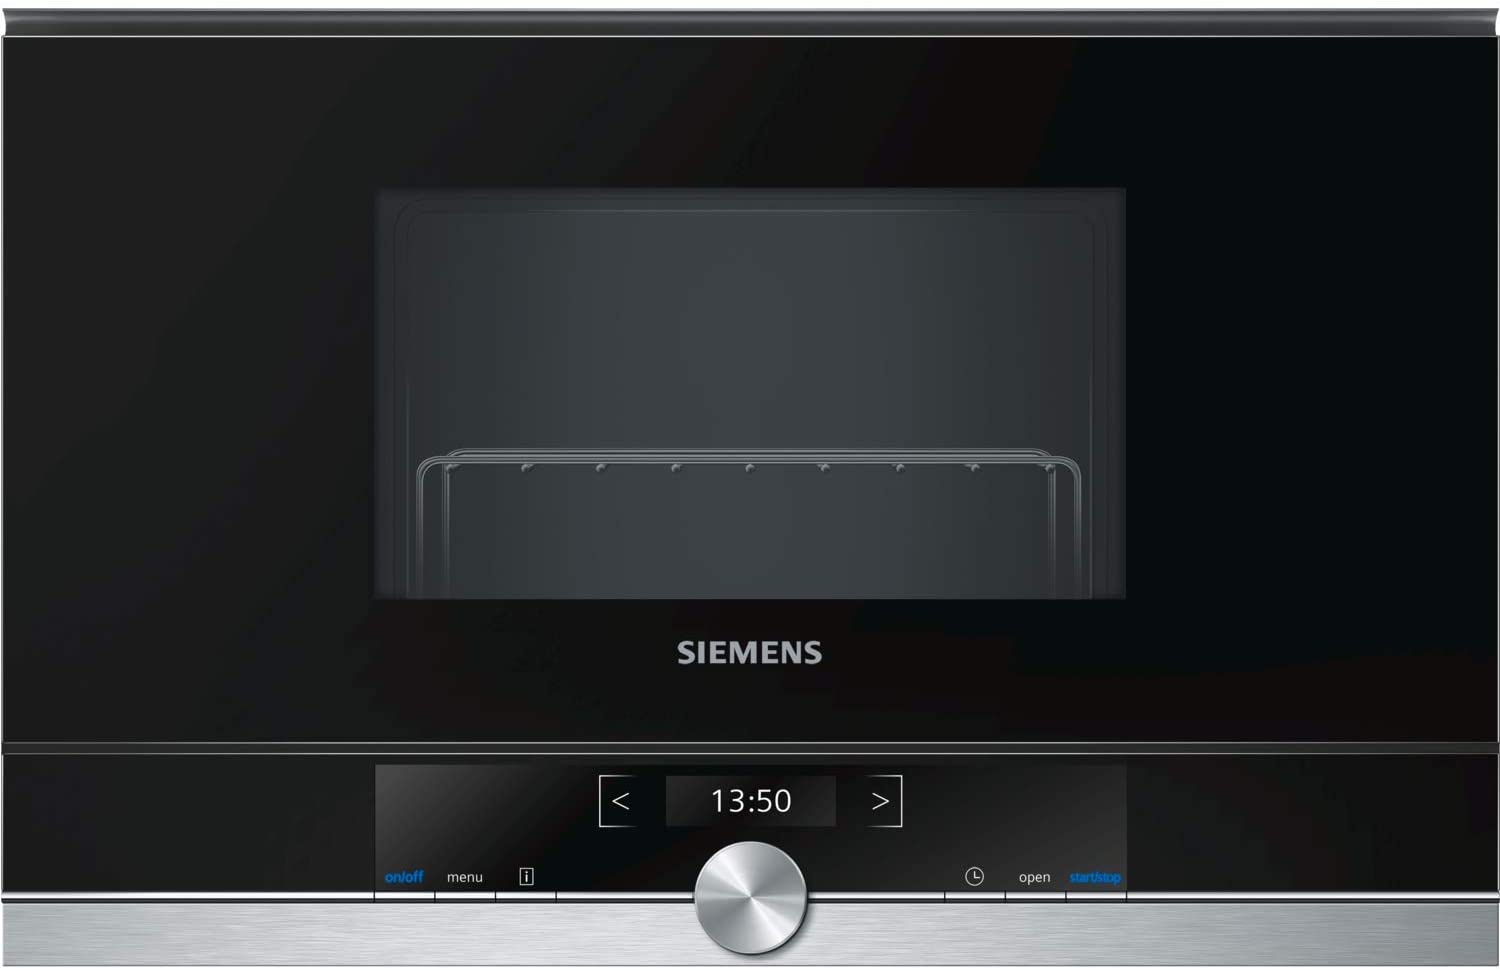 Siemens microawave oven, best kitchen appliance, black, stylish